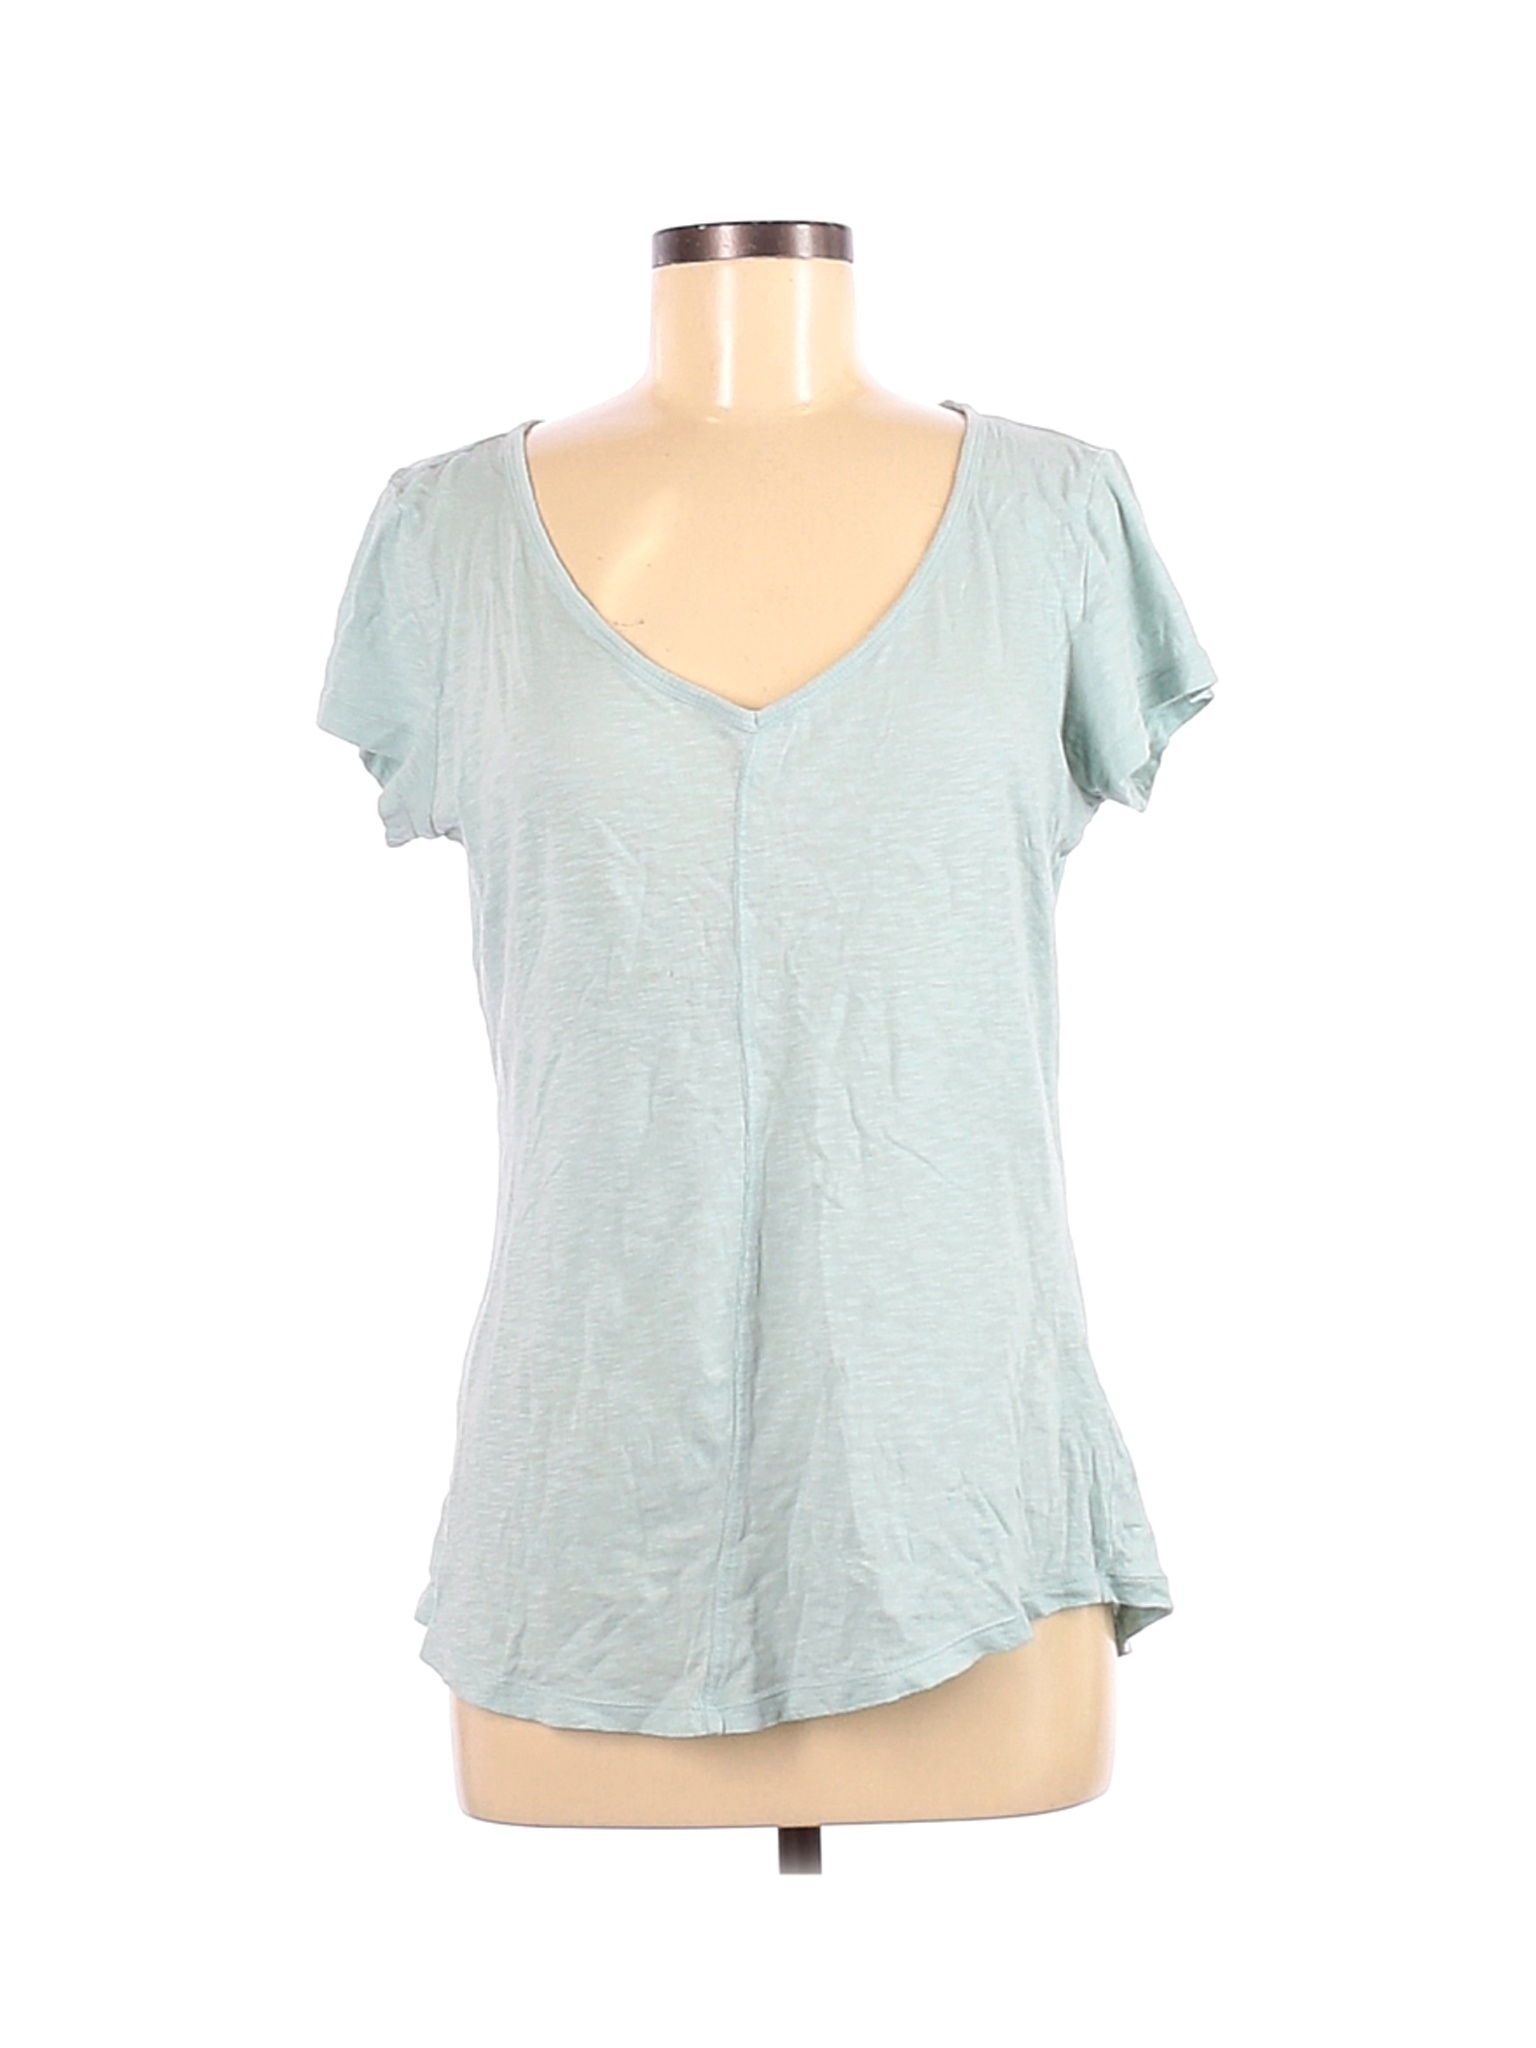 14th & Union Women Blue Short Sleeve T-Shirt M | eBay